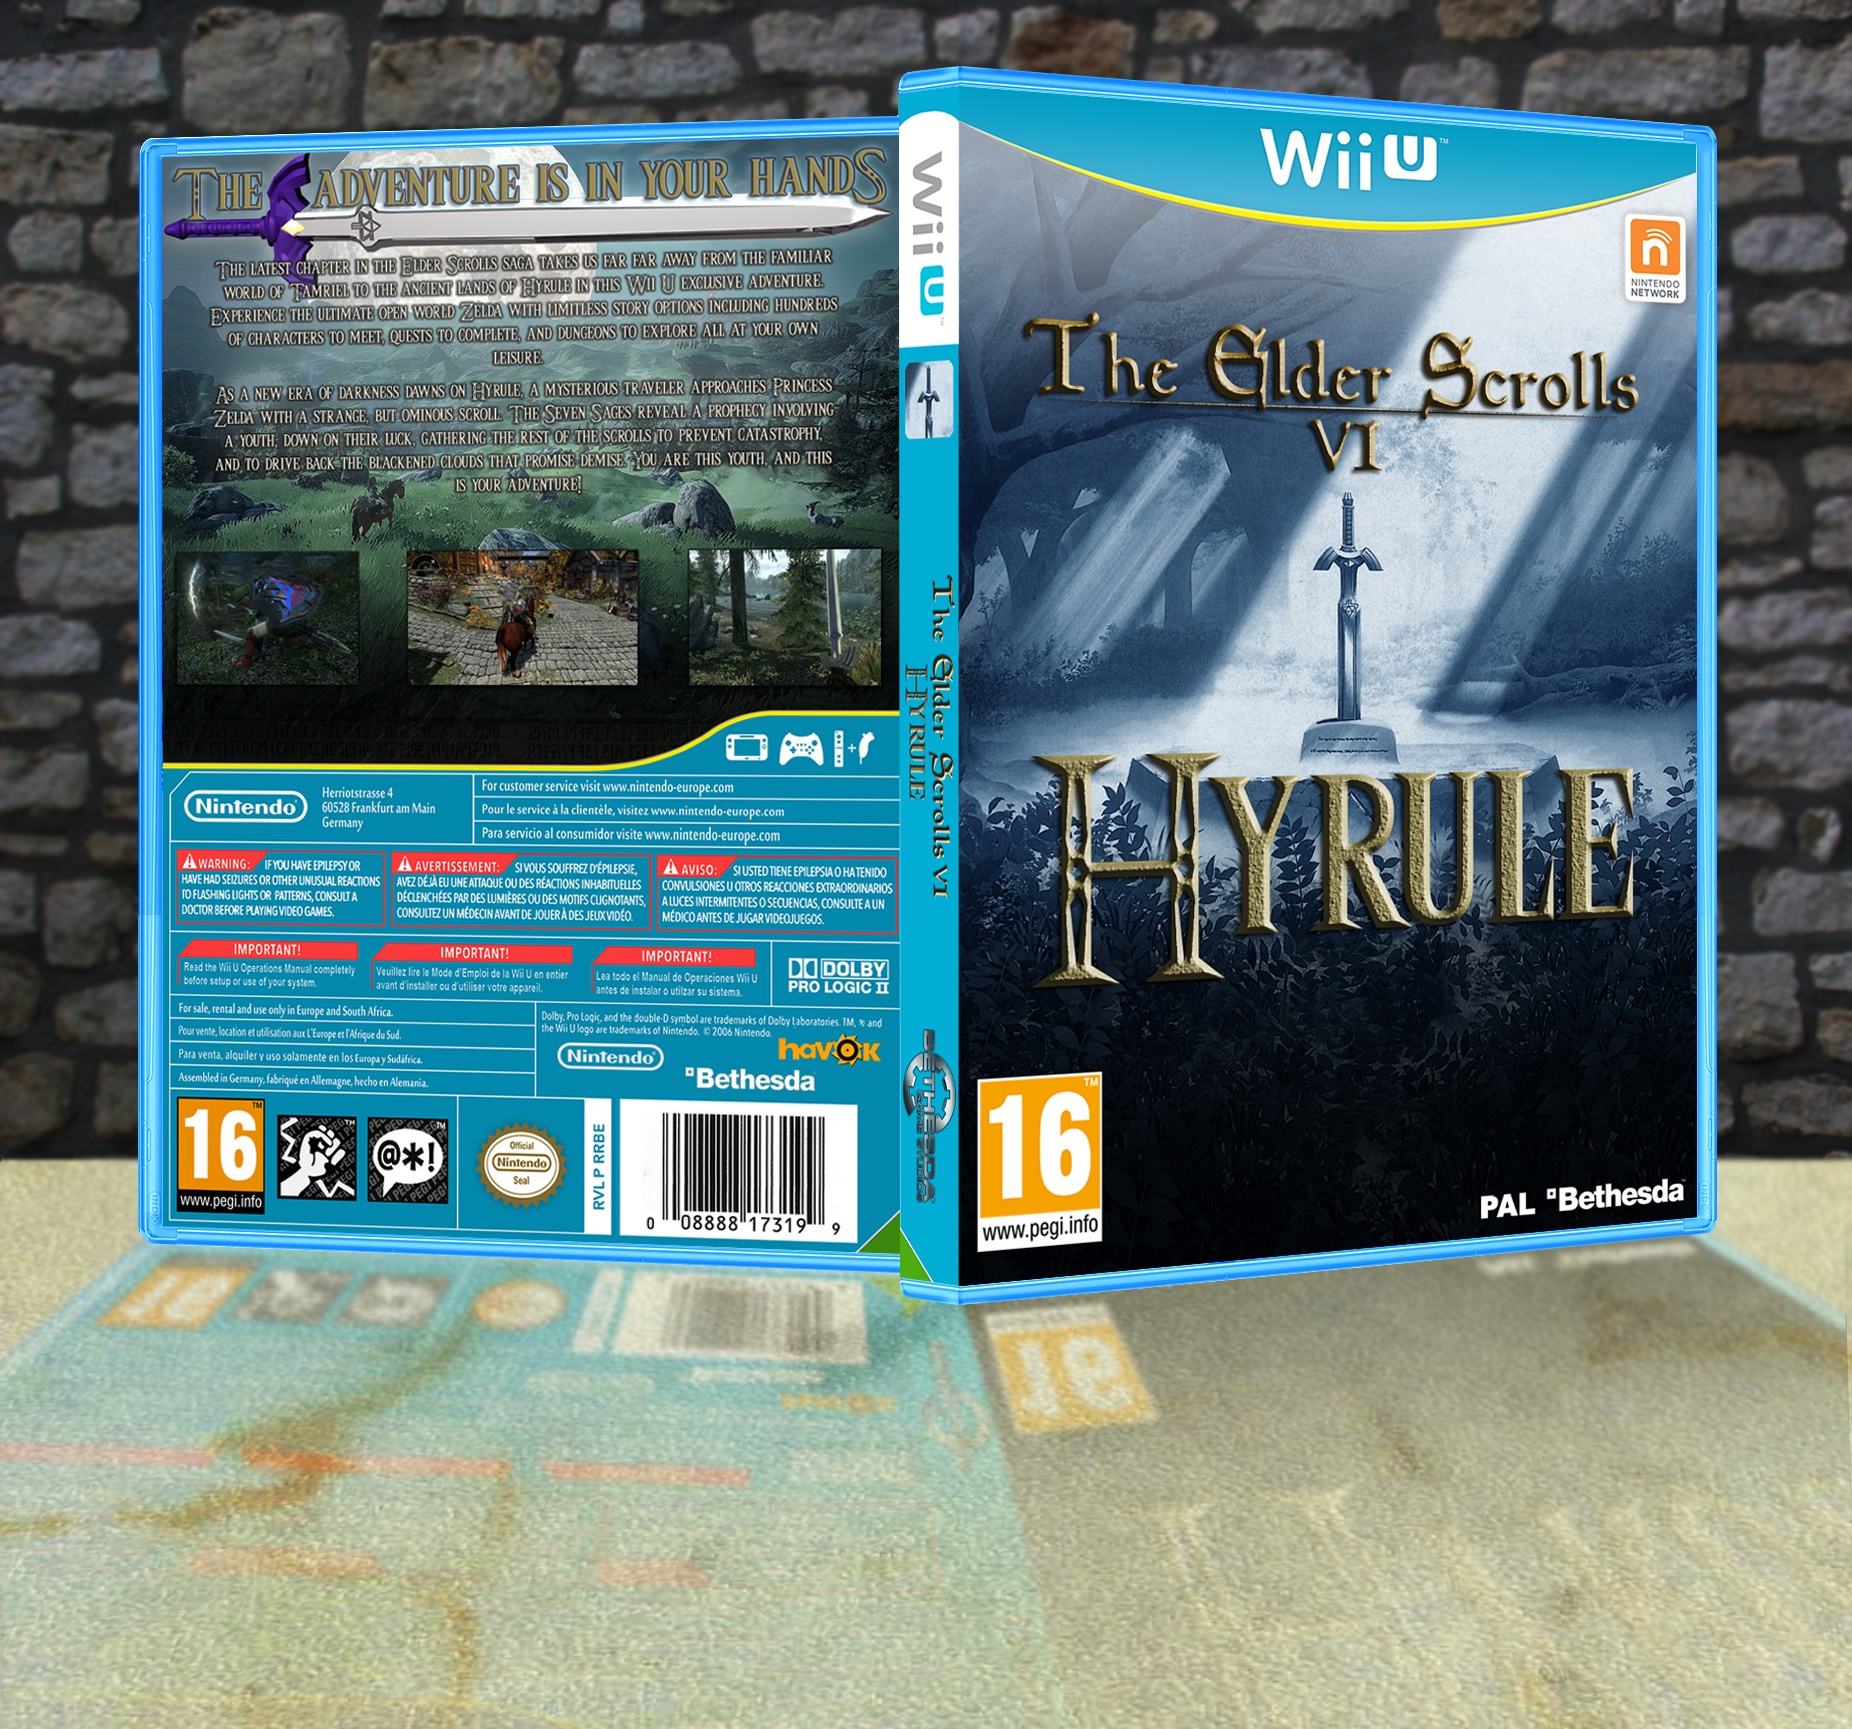 The Elder Scrolls VI: Hyrule box cover